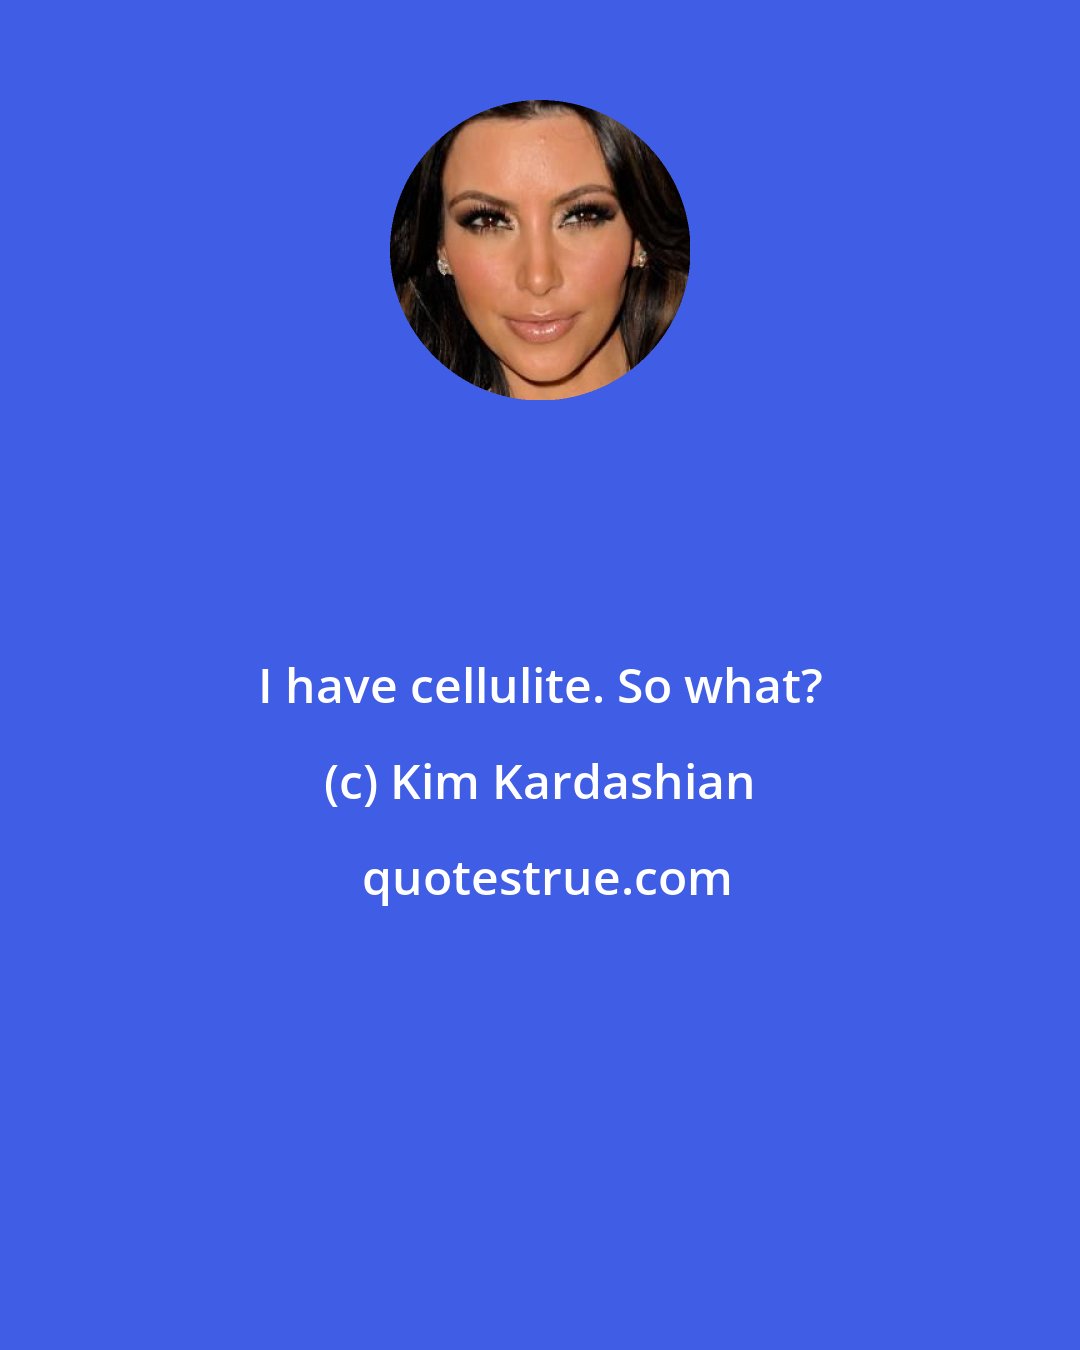 Kim Kardashian: I have cellulite. So what?